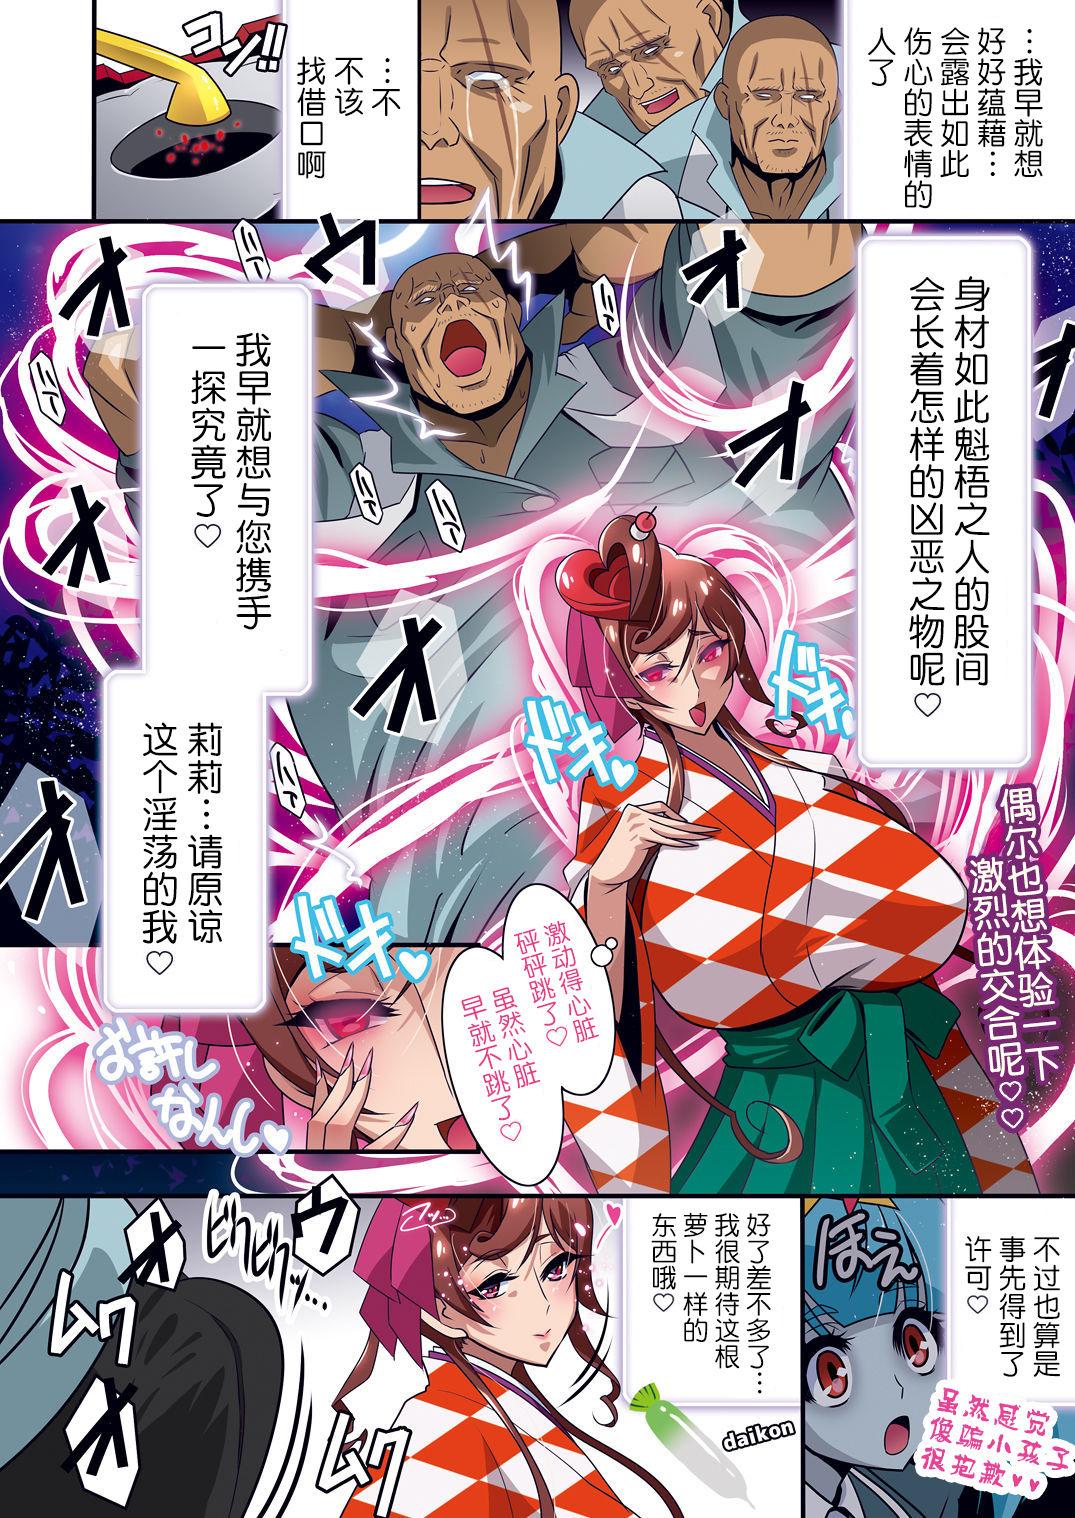 Selfie Nee-san vs Chougokubuto Yuugiri Tai Takeo Gekka no Koubousen - Zombie land saga Bukkake Boys - Page 7